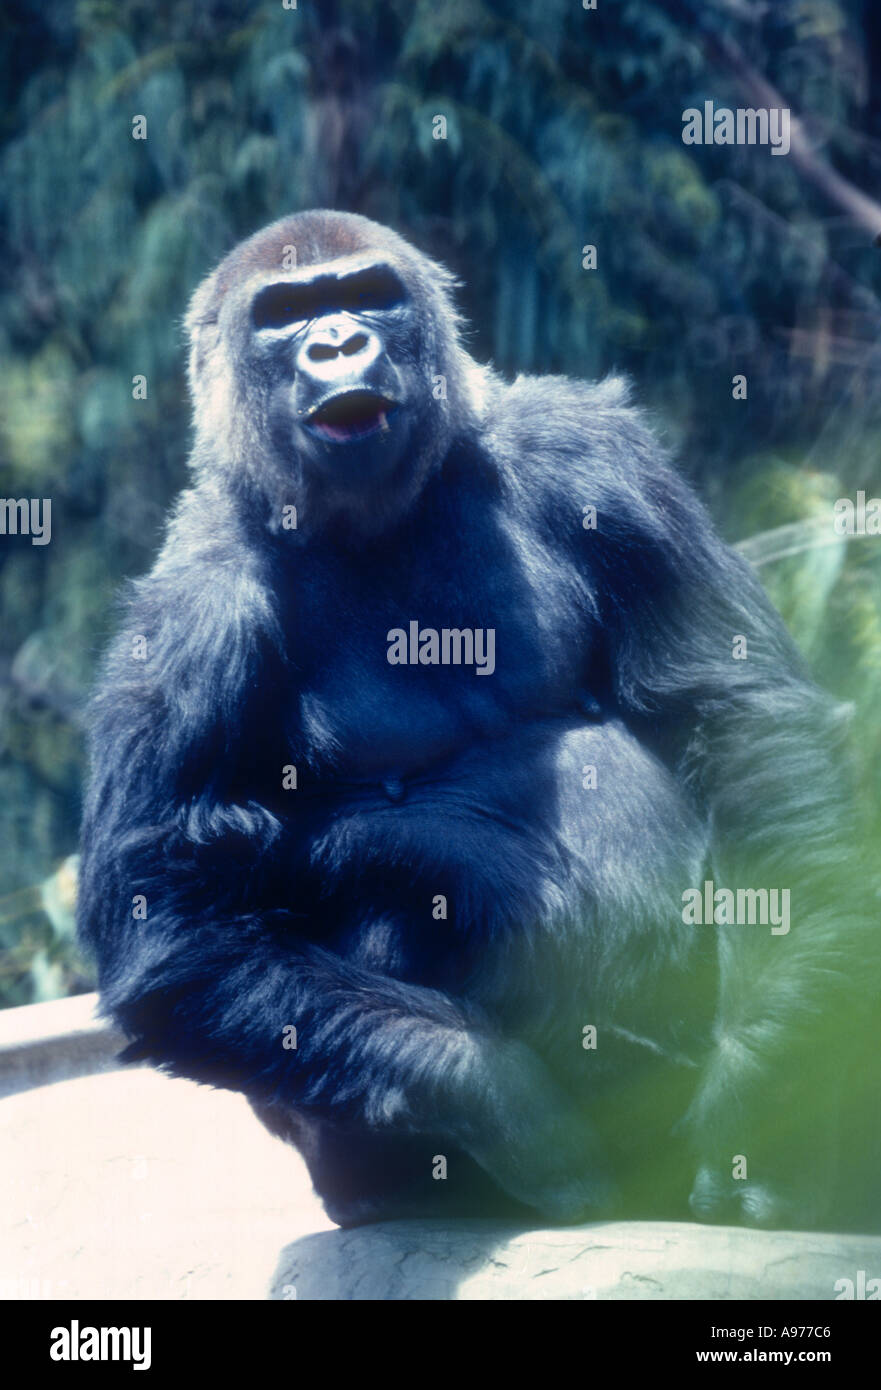 Large gorilla in captivity Stock Photo